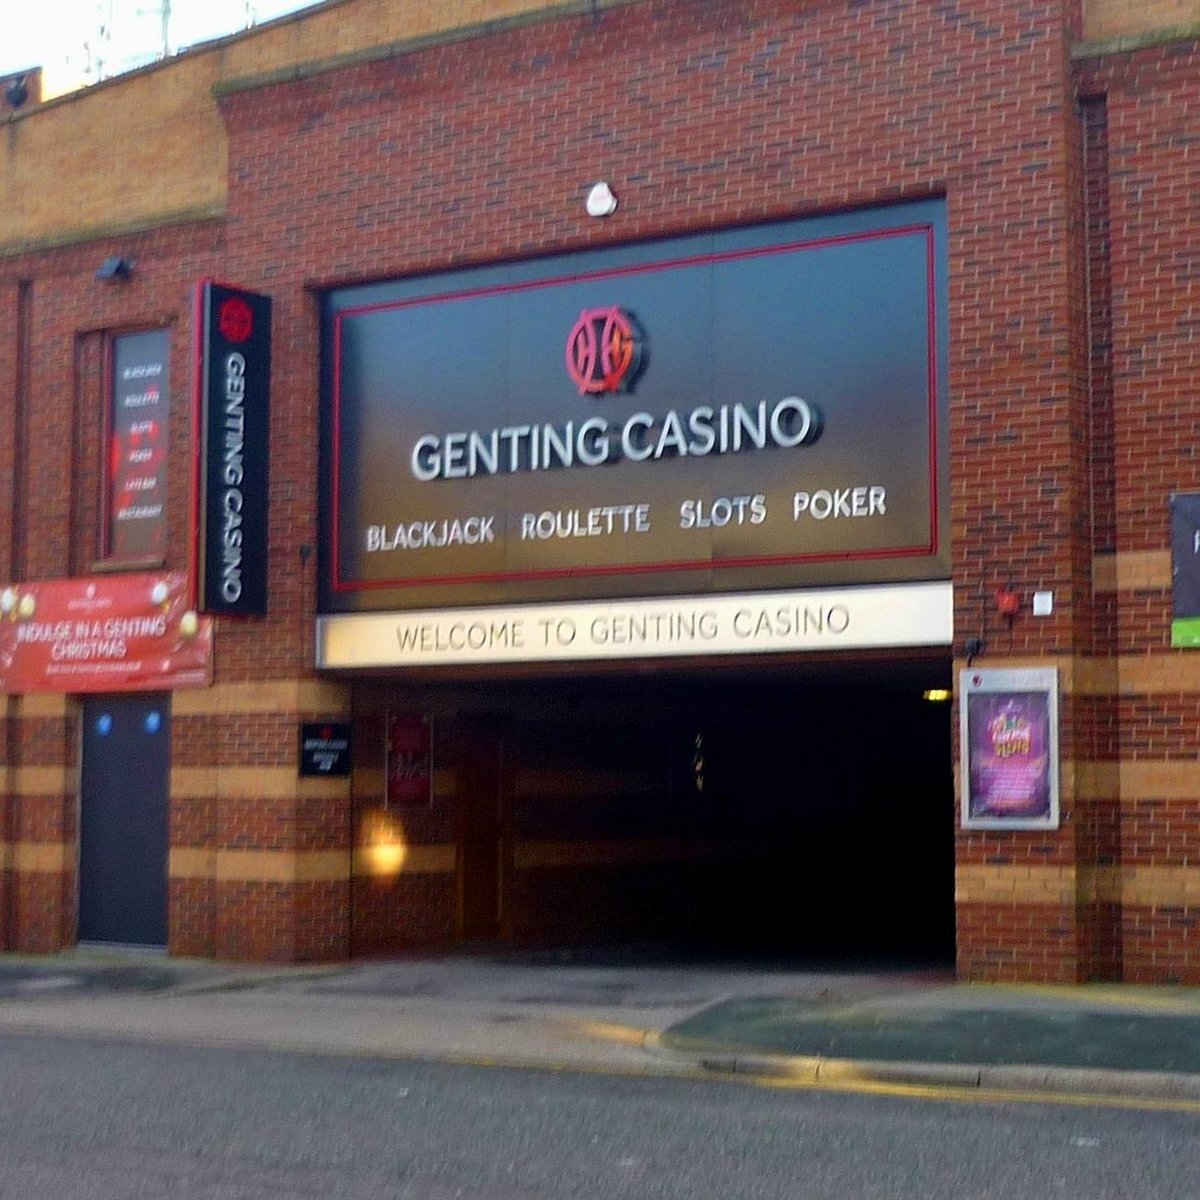 Is genting casino open today